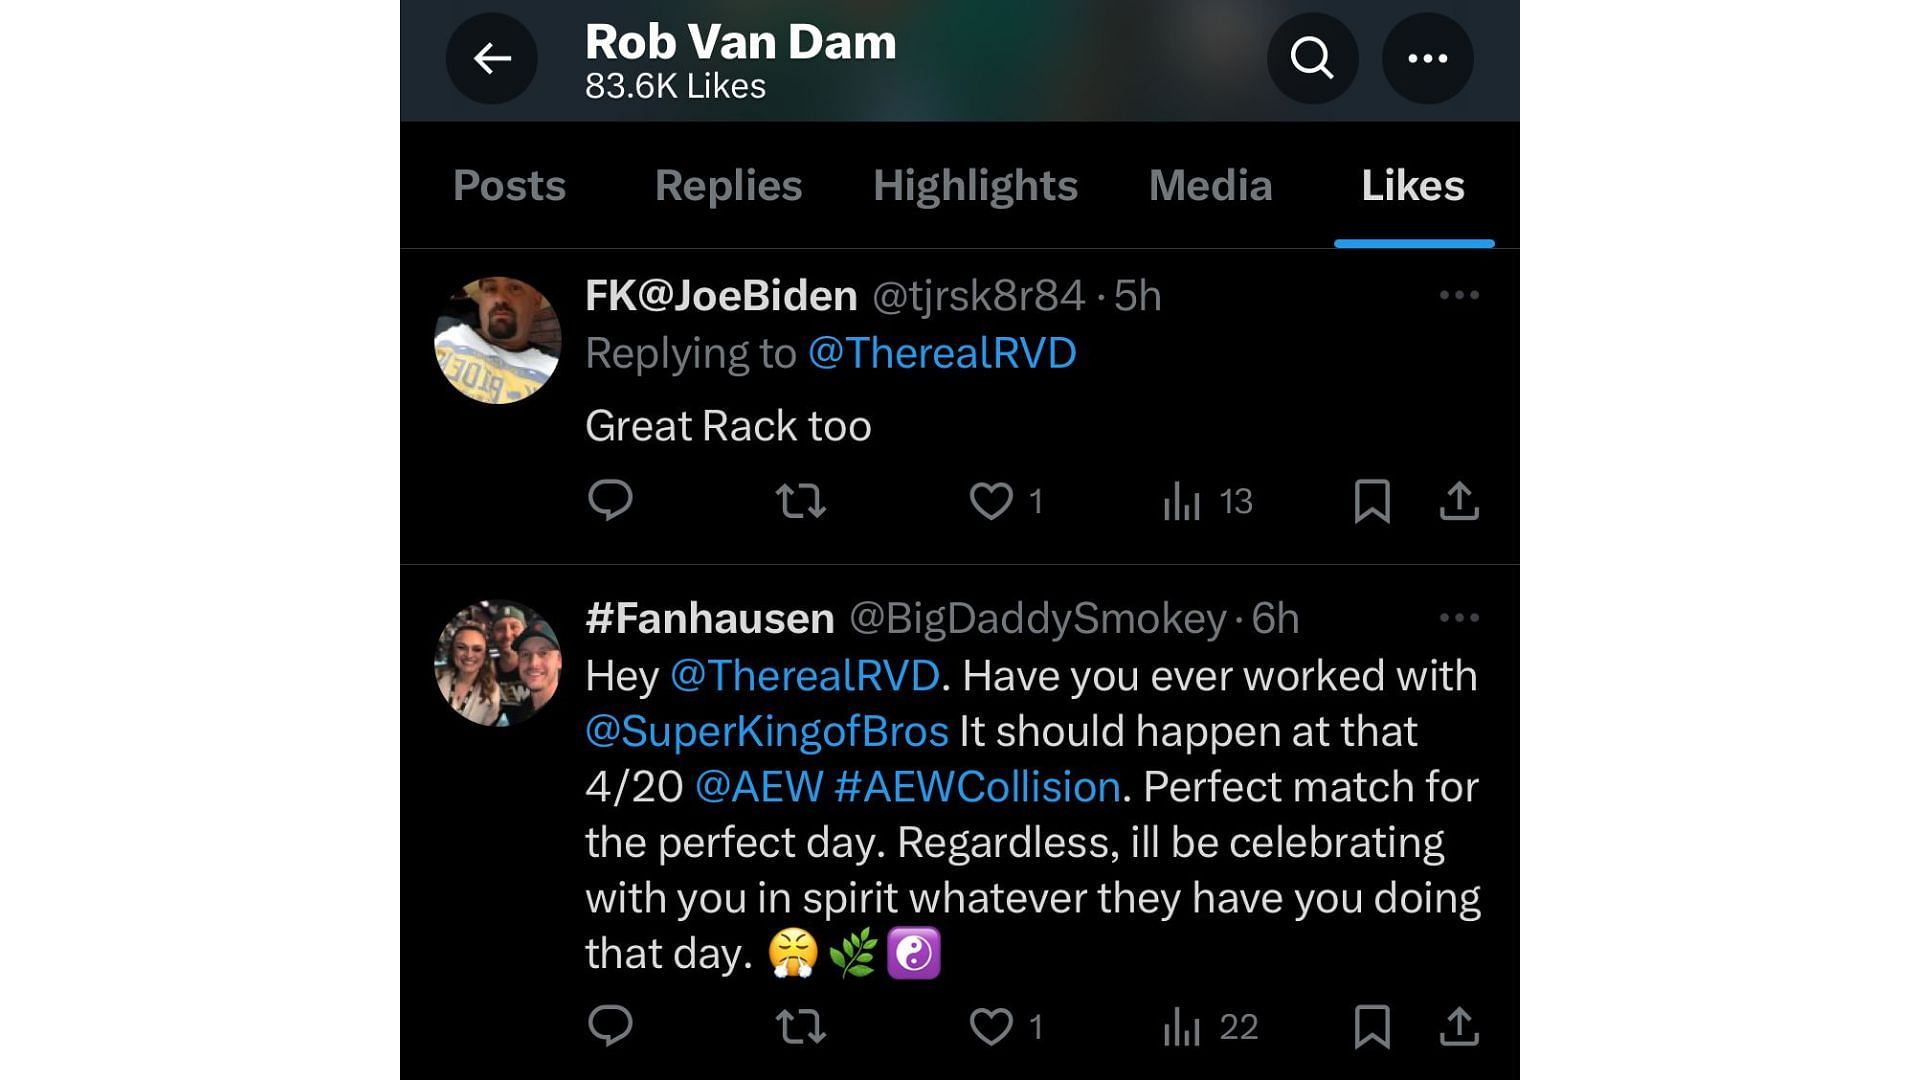 Rob Van Dam liked a tweet concerning Matt Riddle